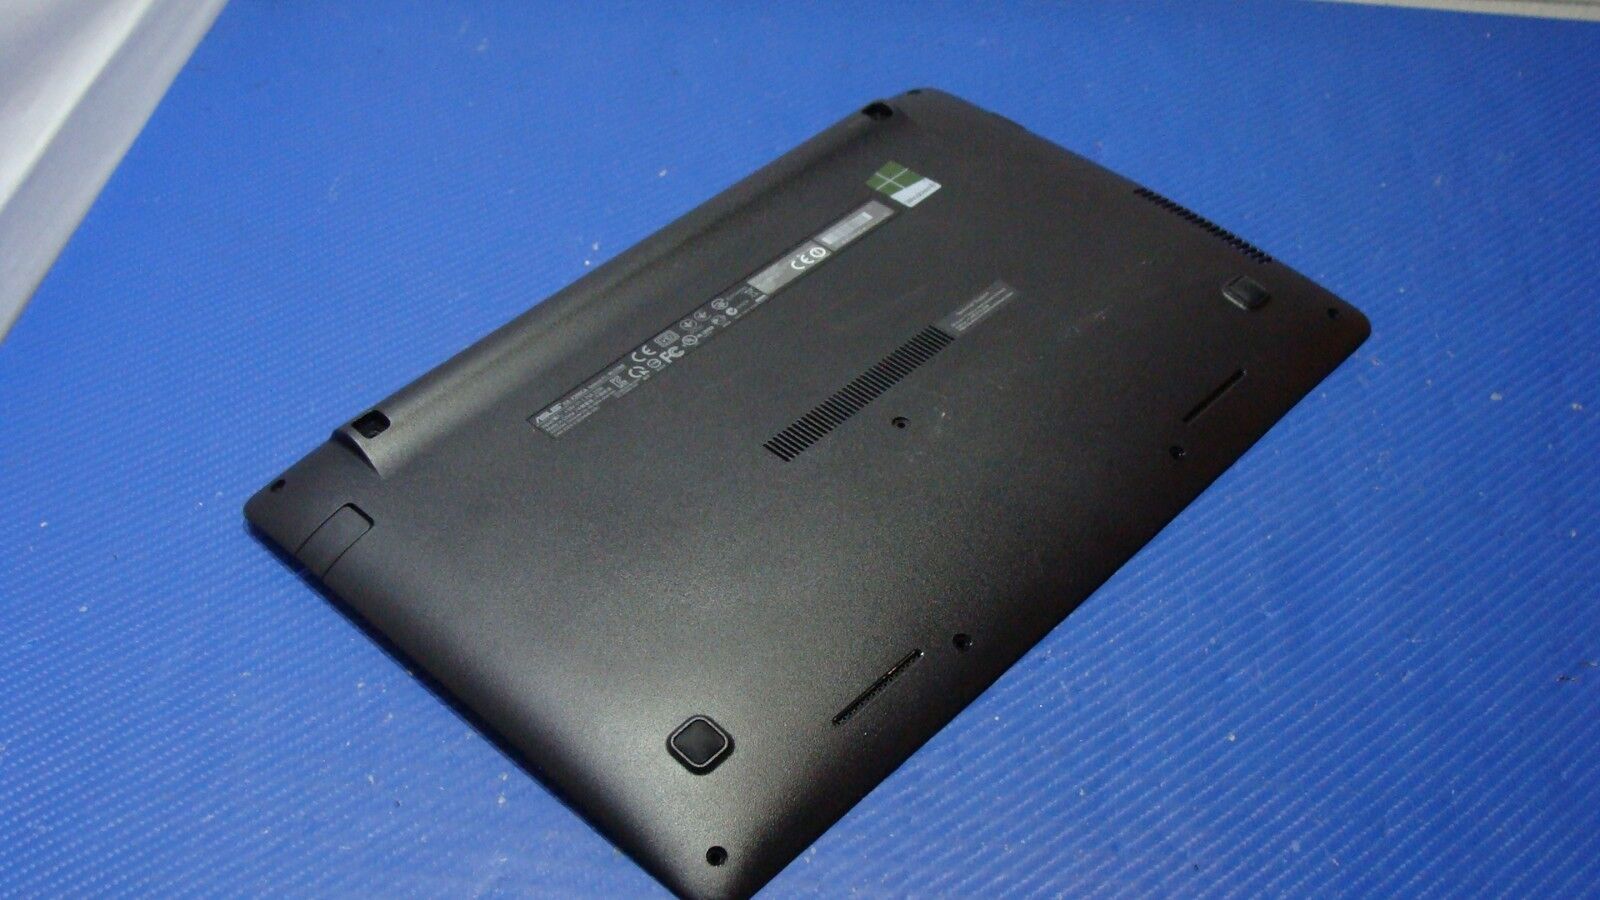 Asus VivoBook 11.6